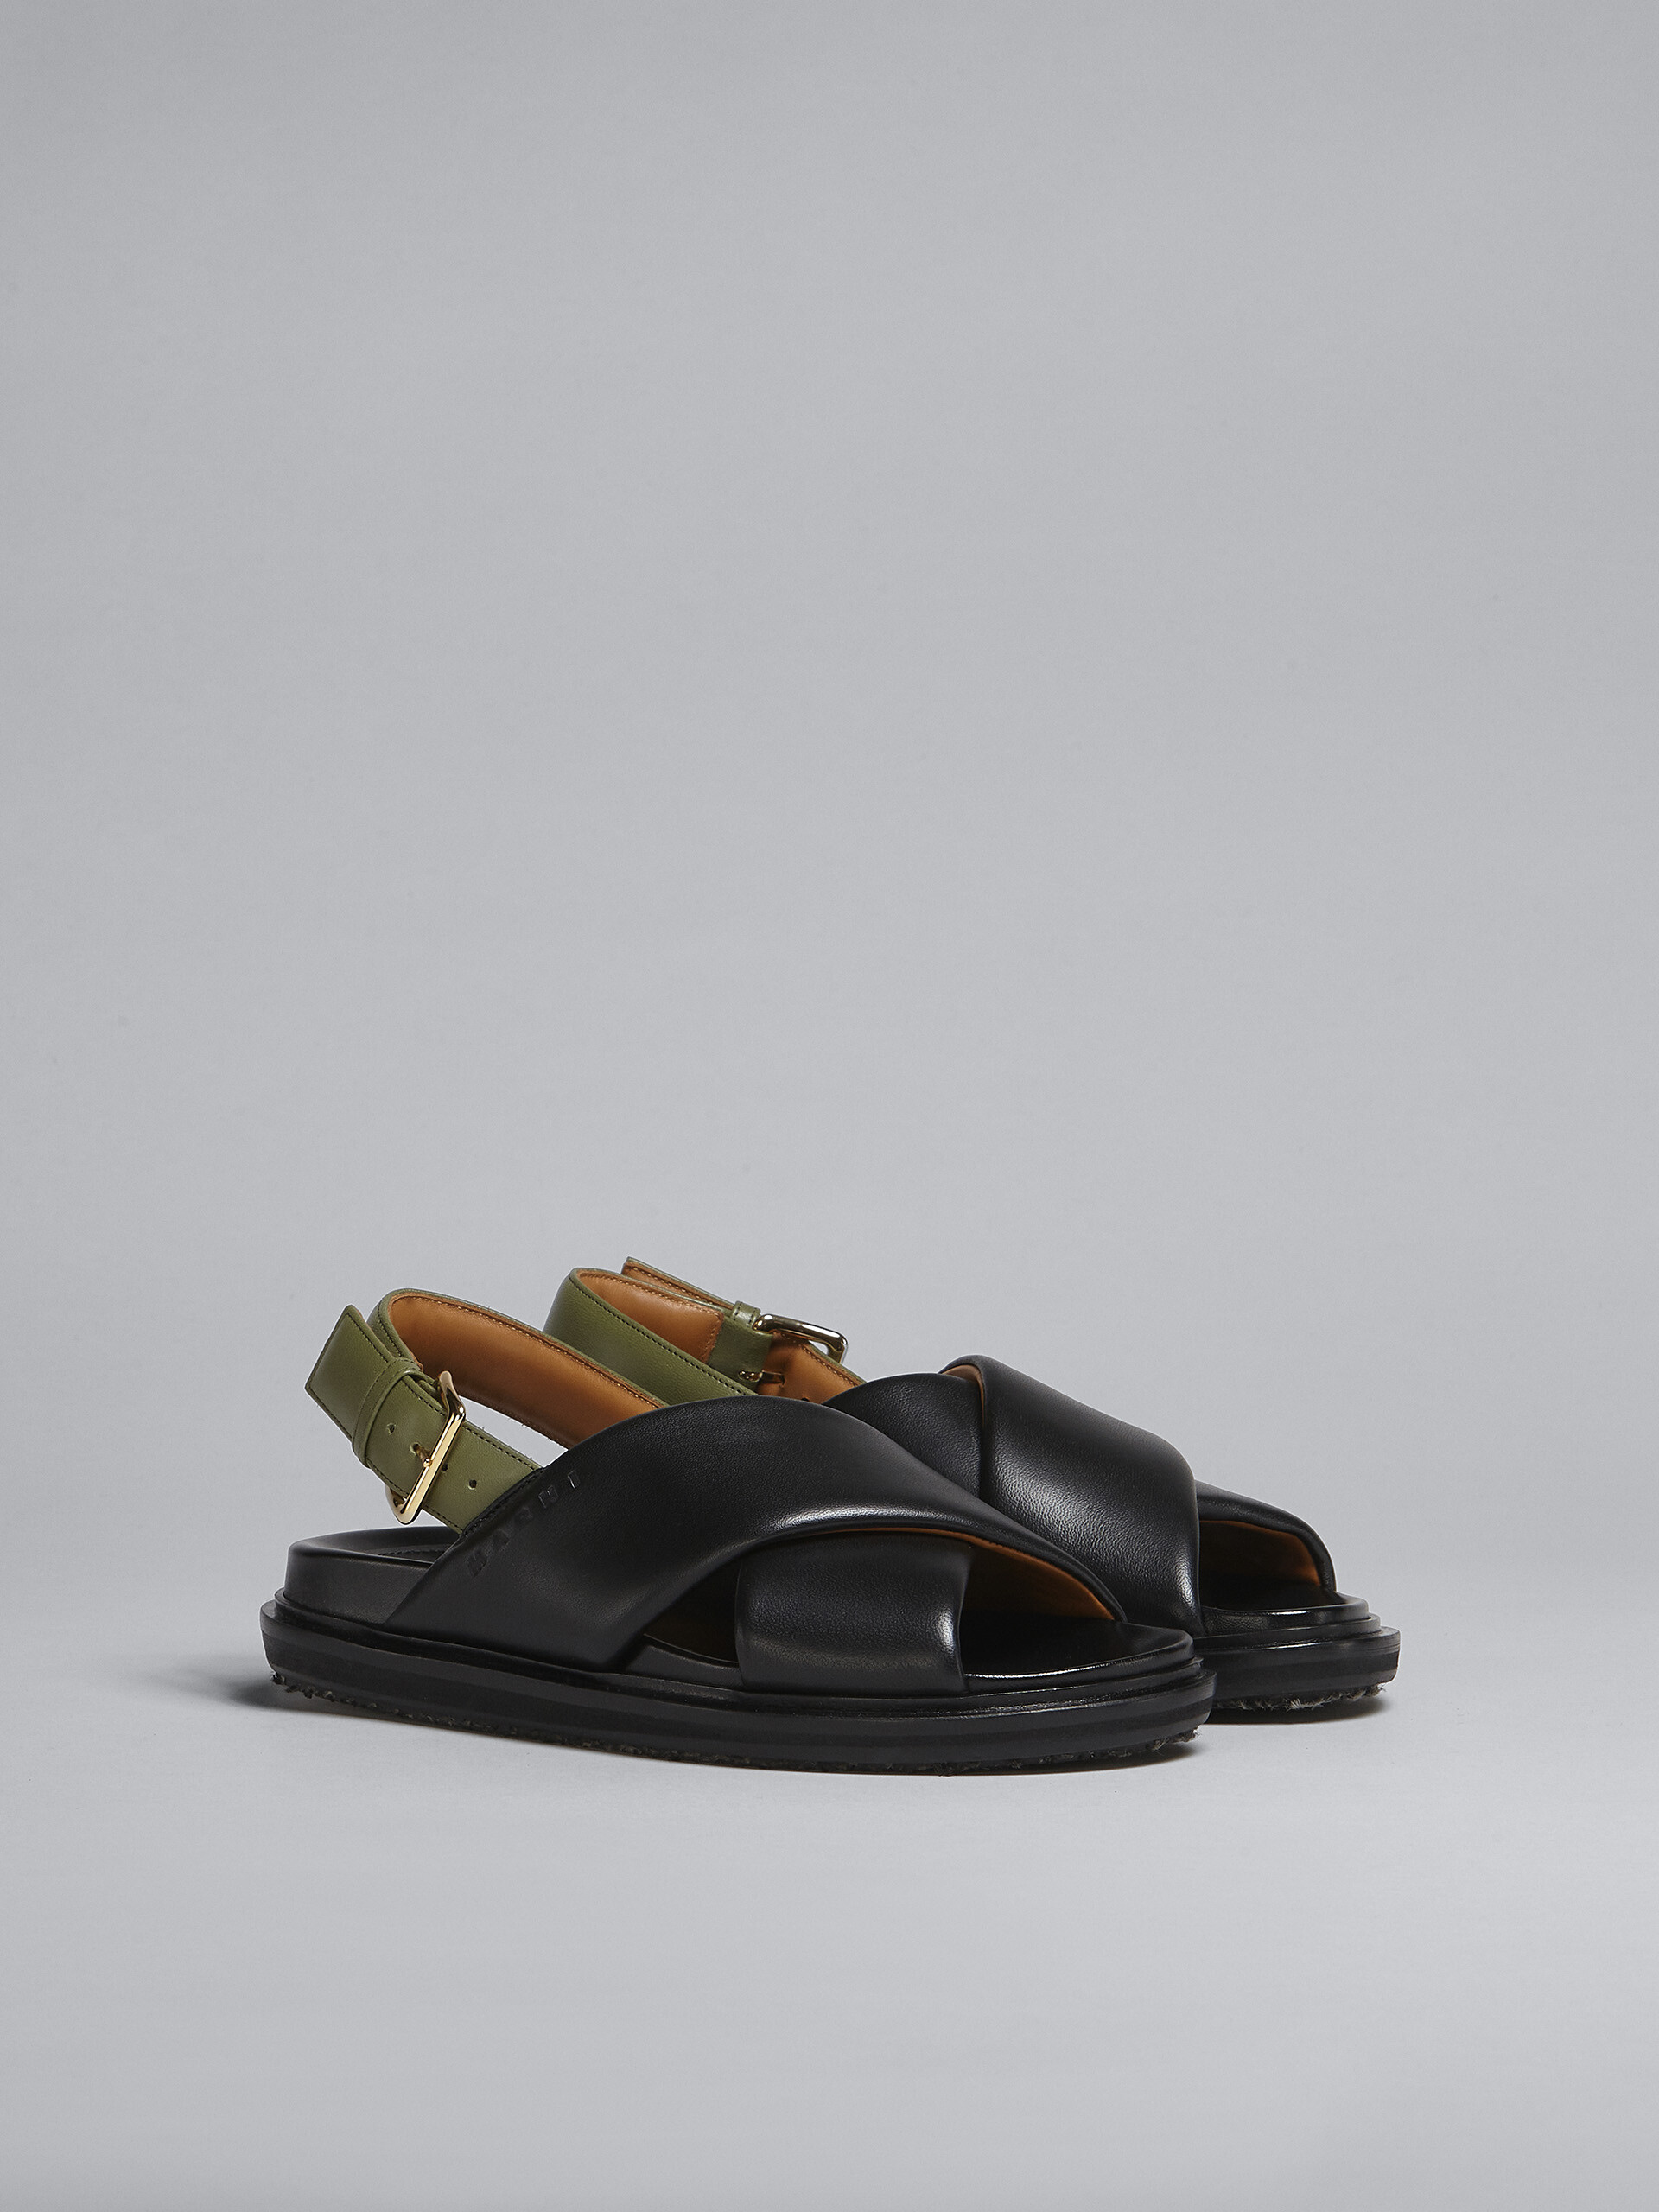 Sandales fussbett en cuir noir et vert - Sandales - Image 2